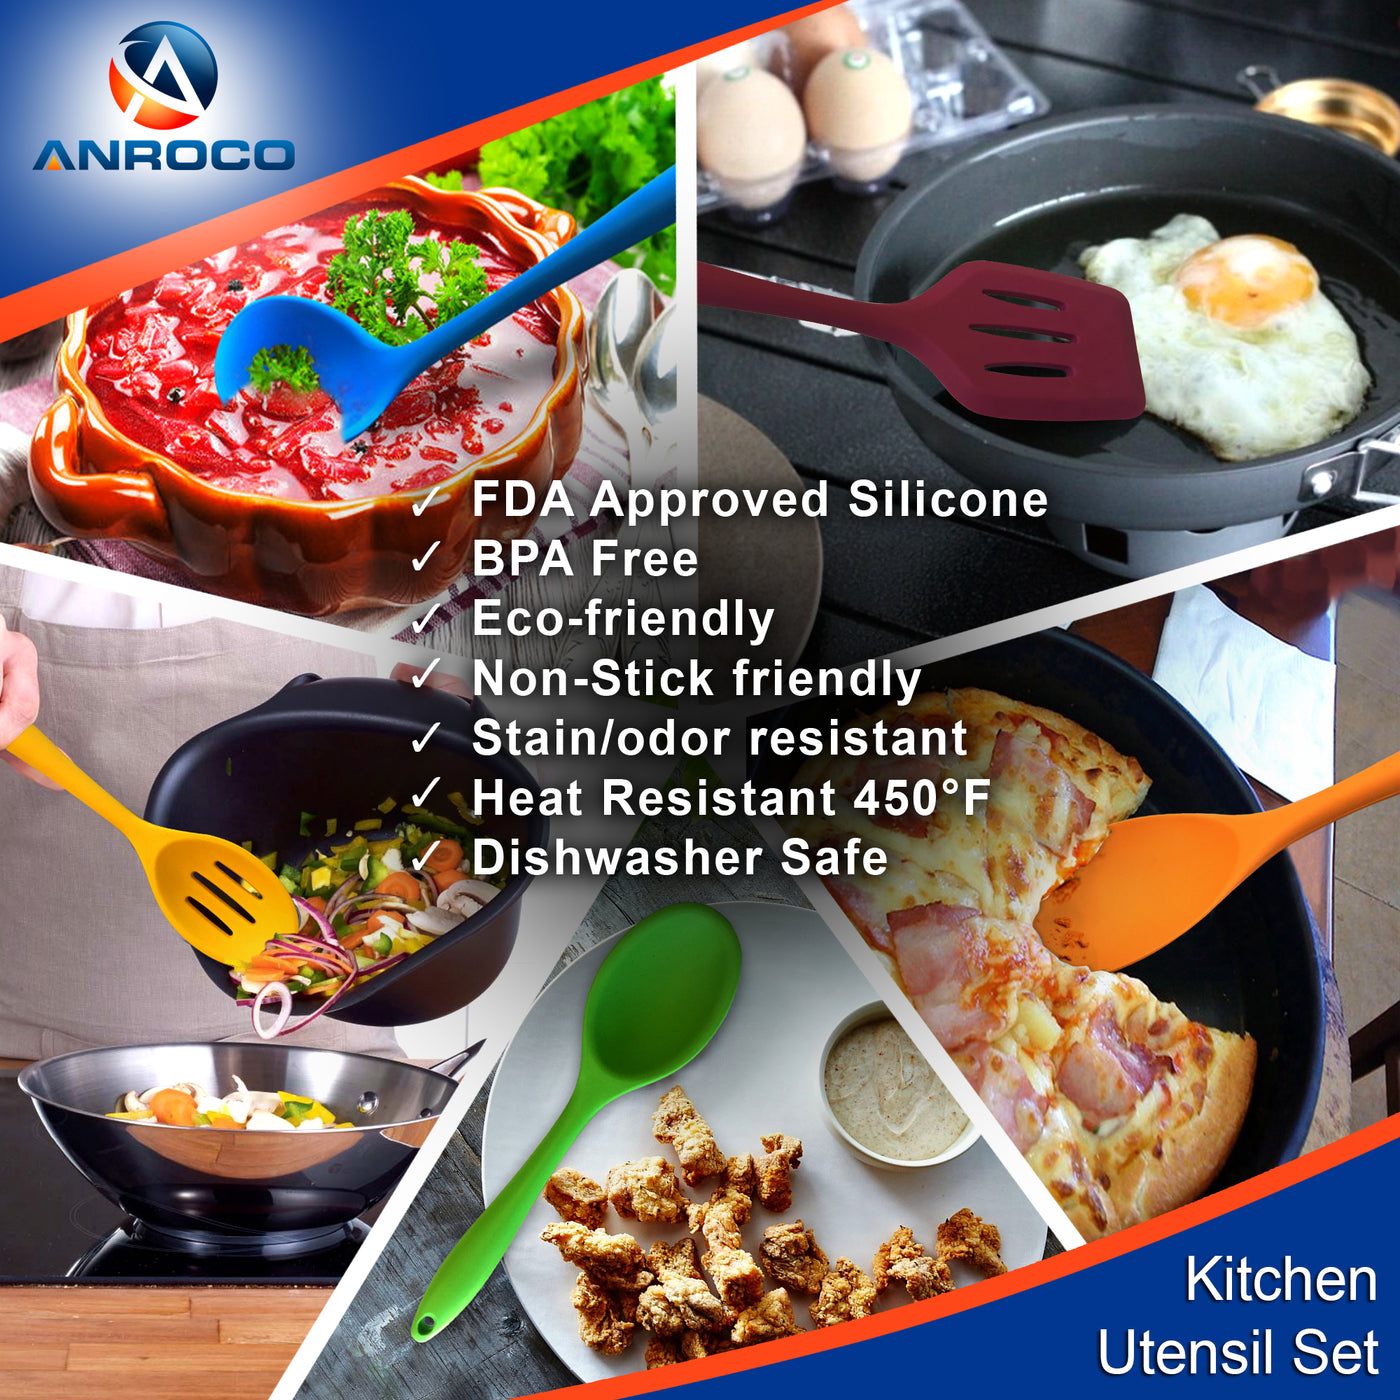 Multicolor Plastic Dishwasher Scrubber, For Utensils And Kitchen